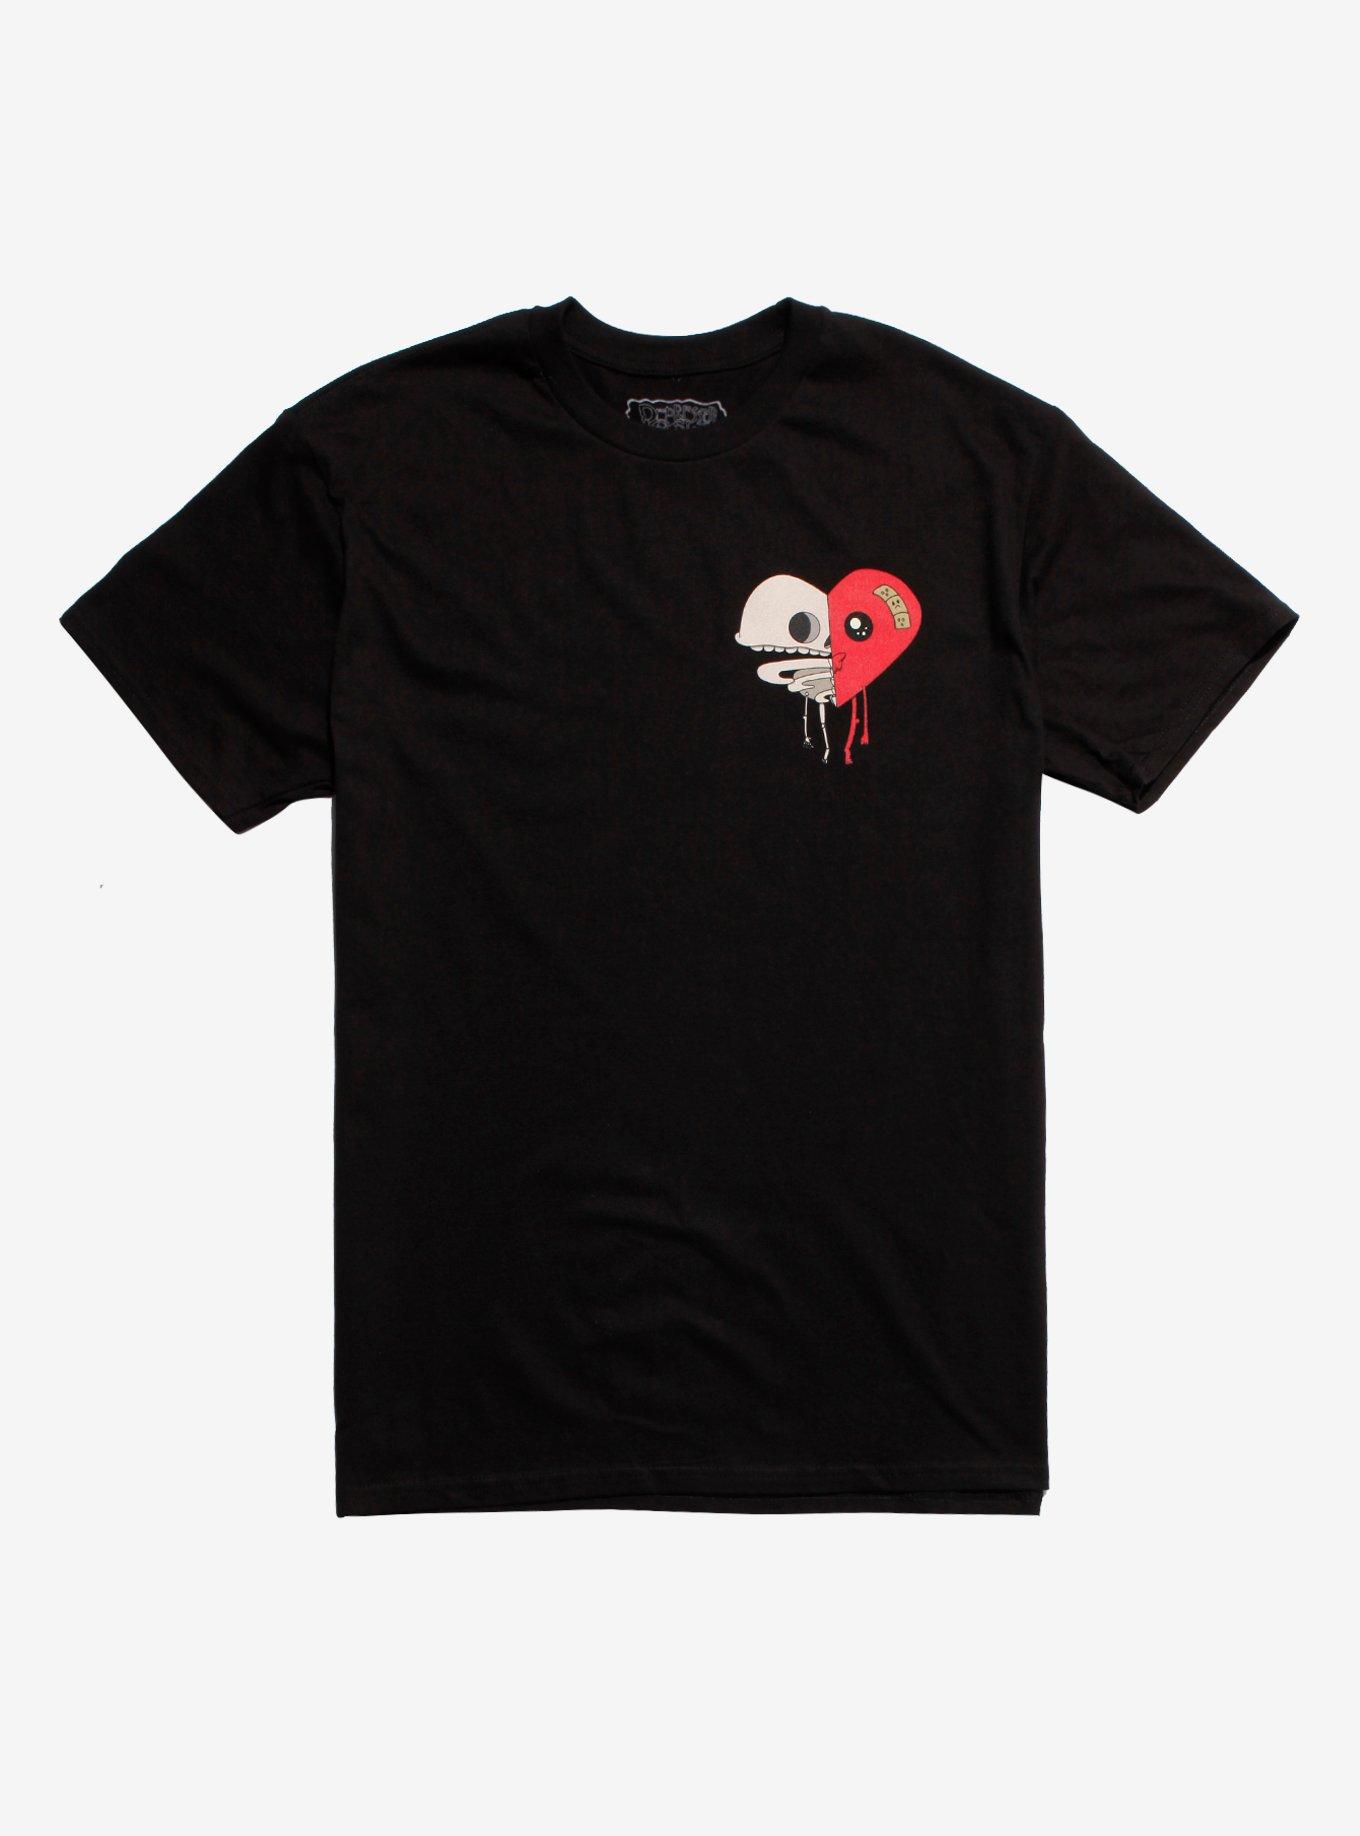 Depressed Monsters Skele-Heart T-Shirt By Ryan Brunty | Hot Topic